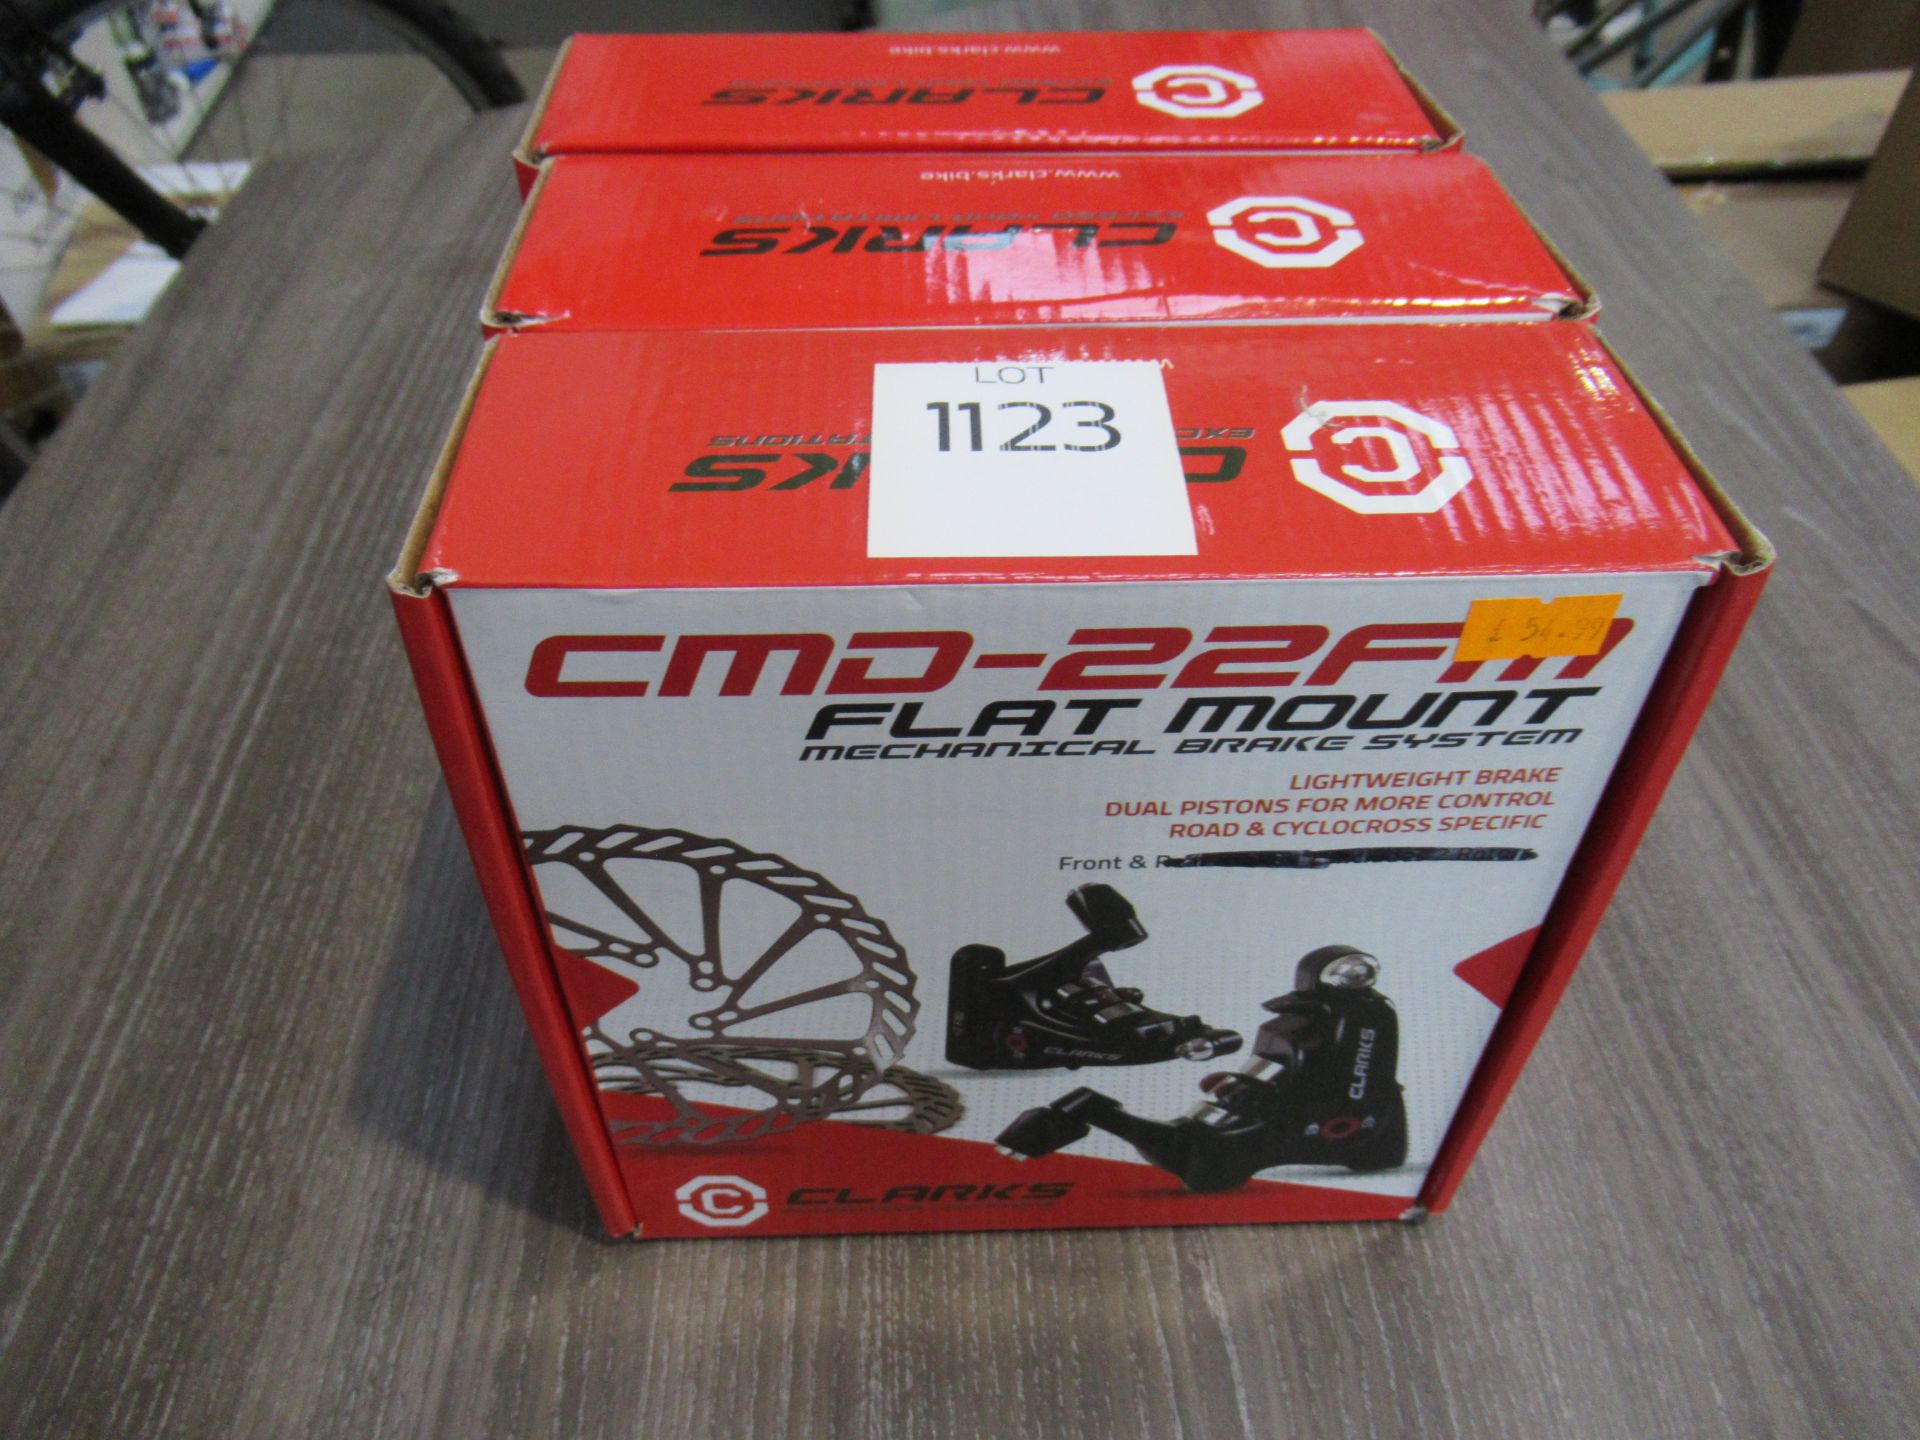 3 x Clarks CMD-22FM Flat Mount Mechanical Brake systems - 1 x missing rear set (RRP£54.99) 2 x compl